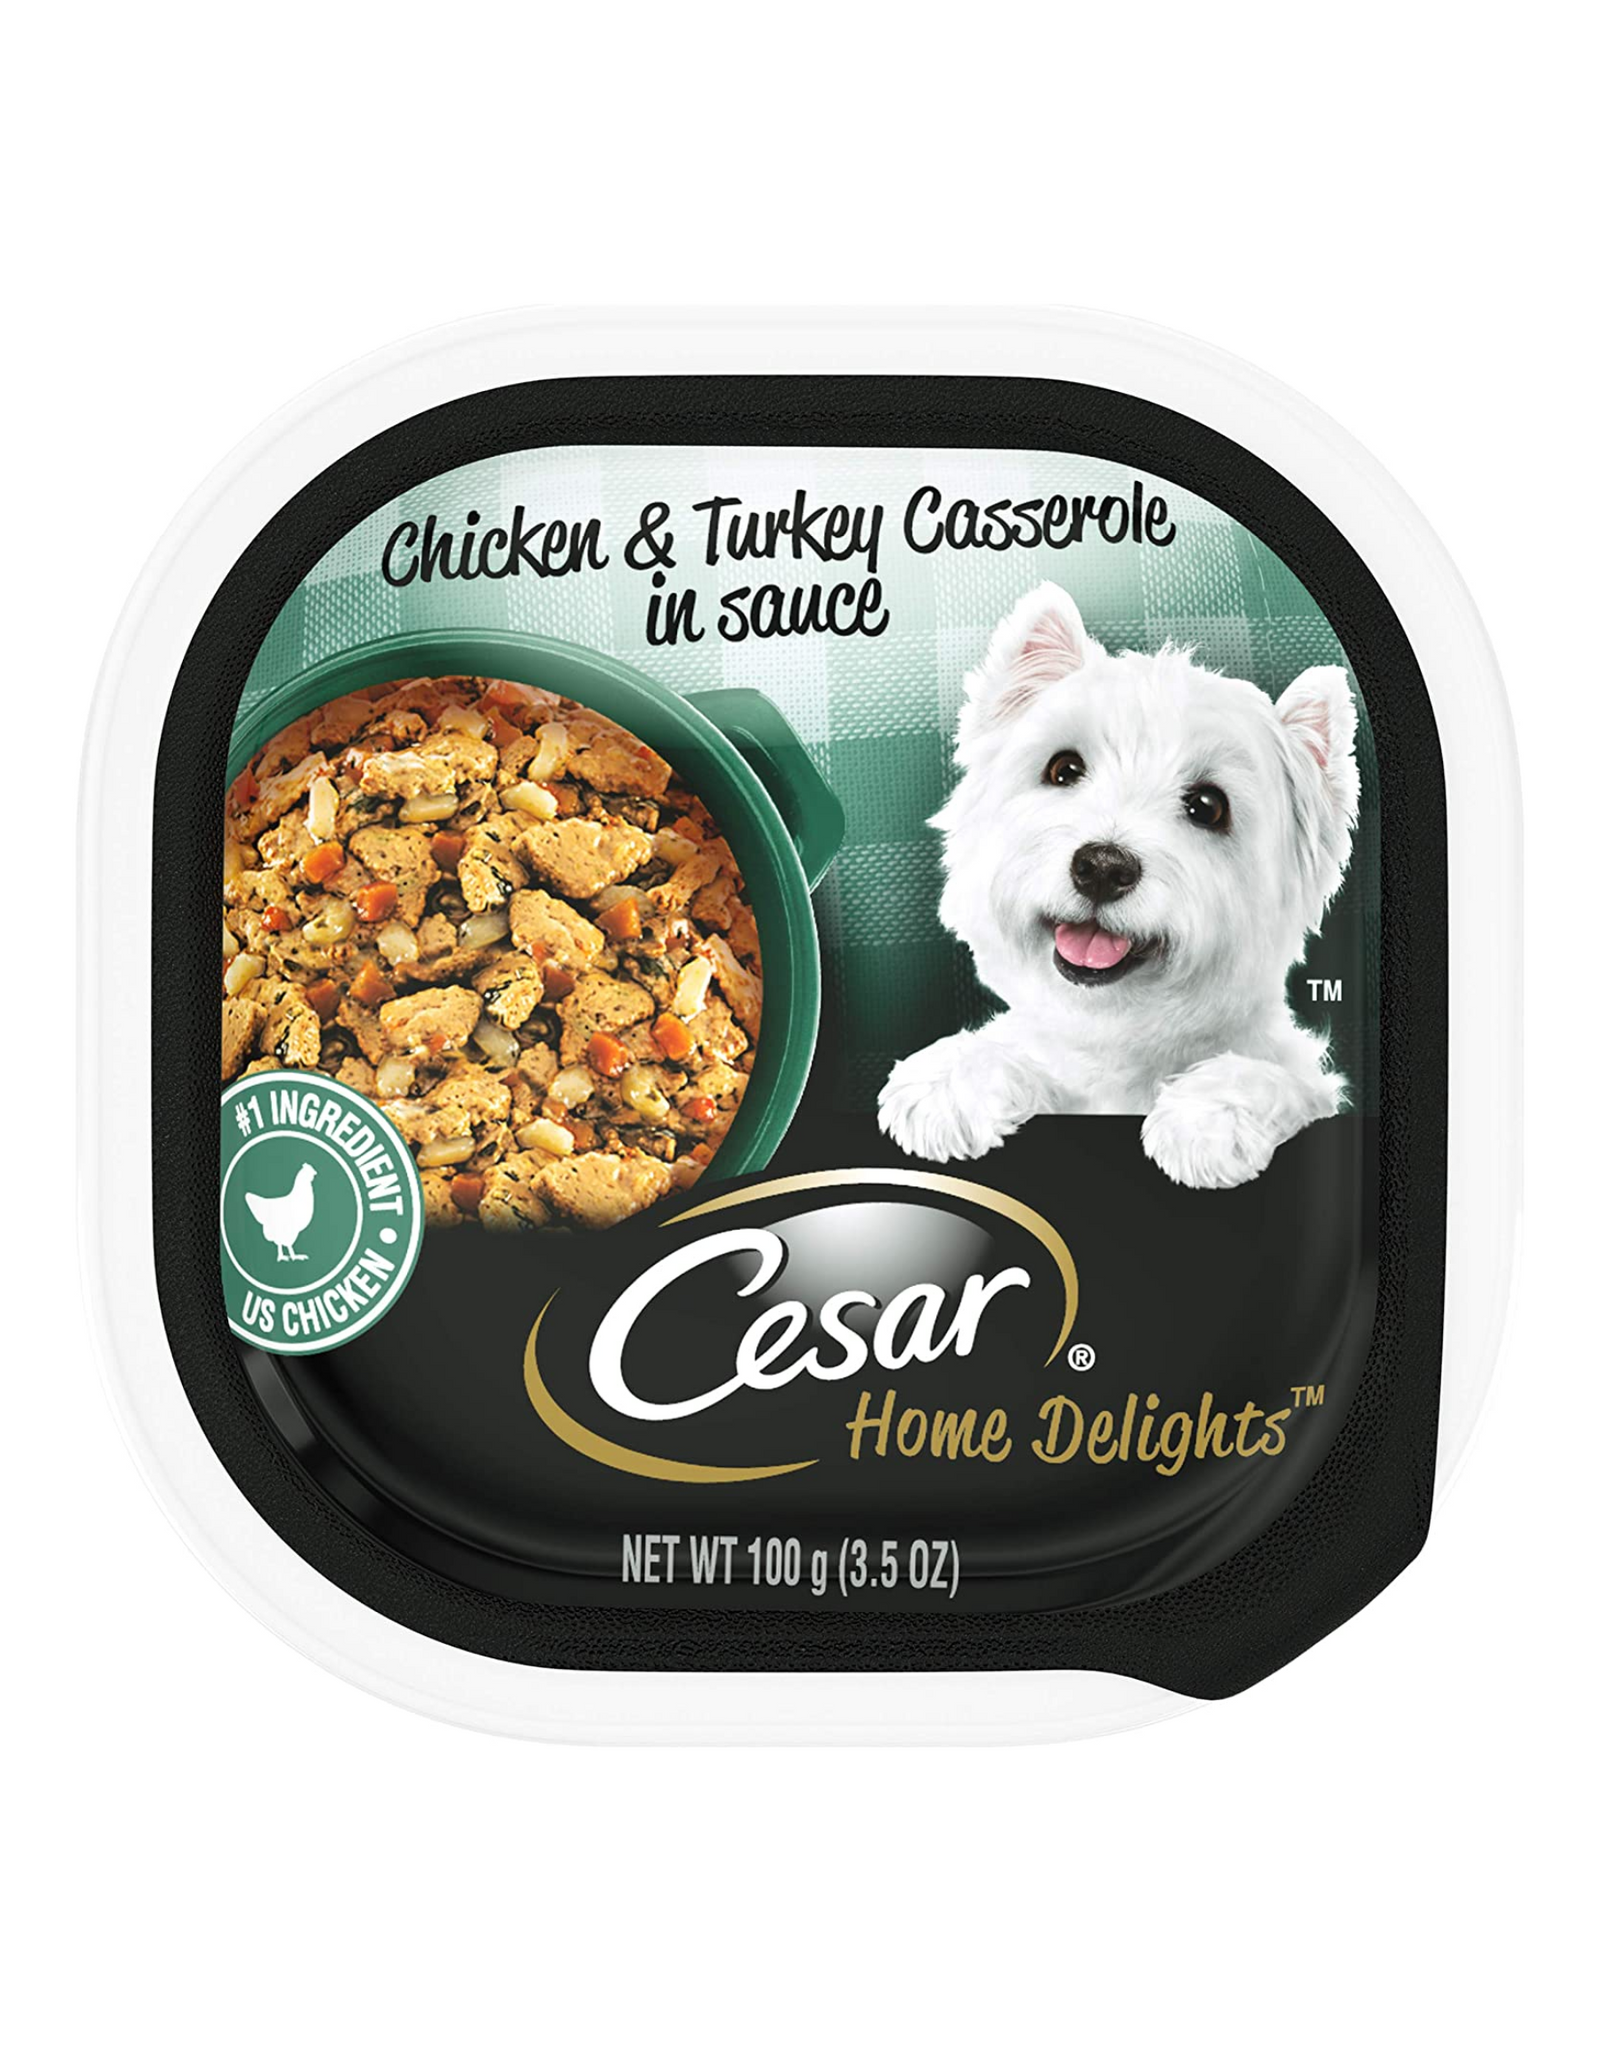 CESAR HOME DELIGHTS Chicken & Turkey Casserole in Sauce, 3.5 oz, 24 Count